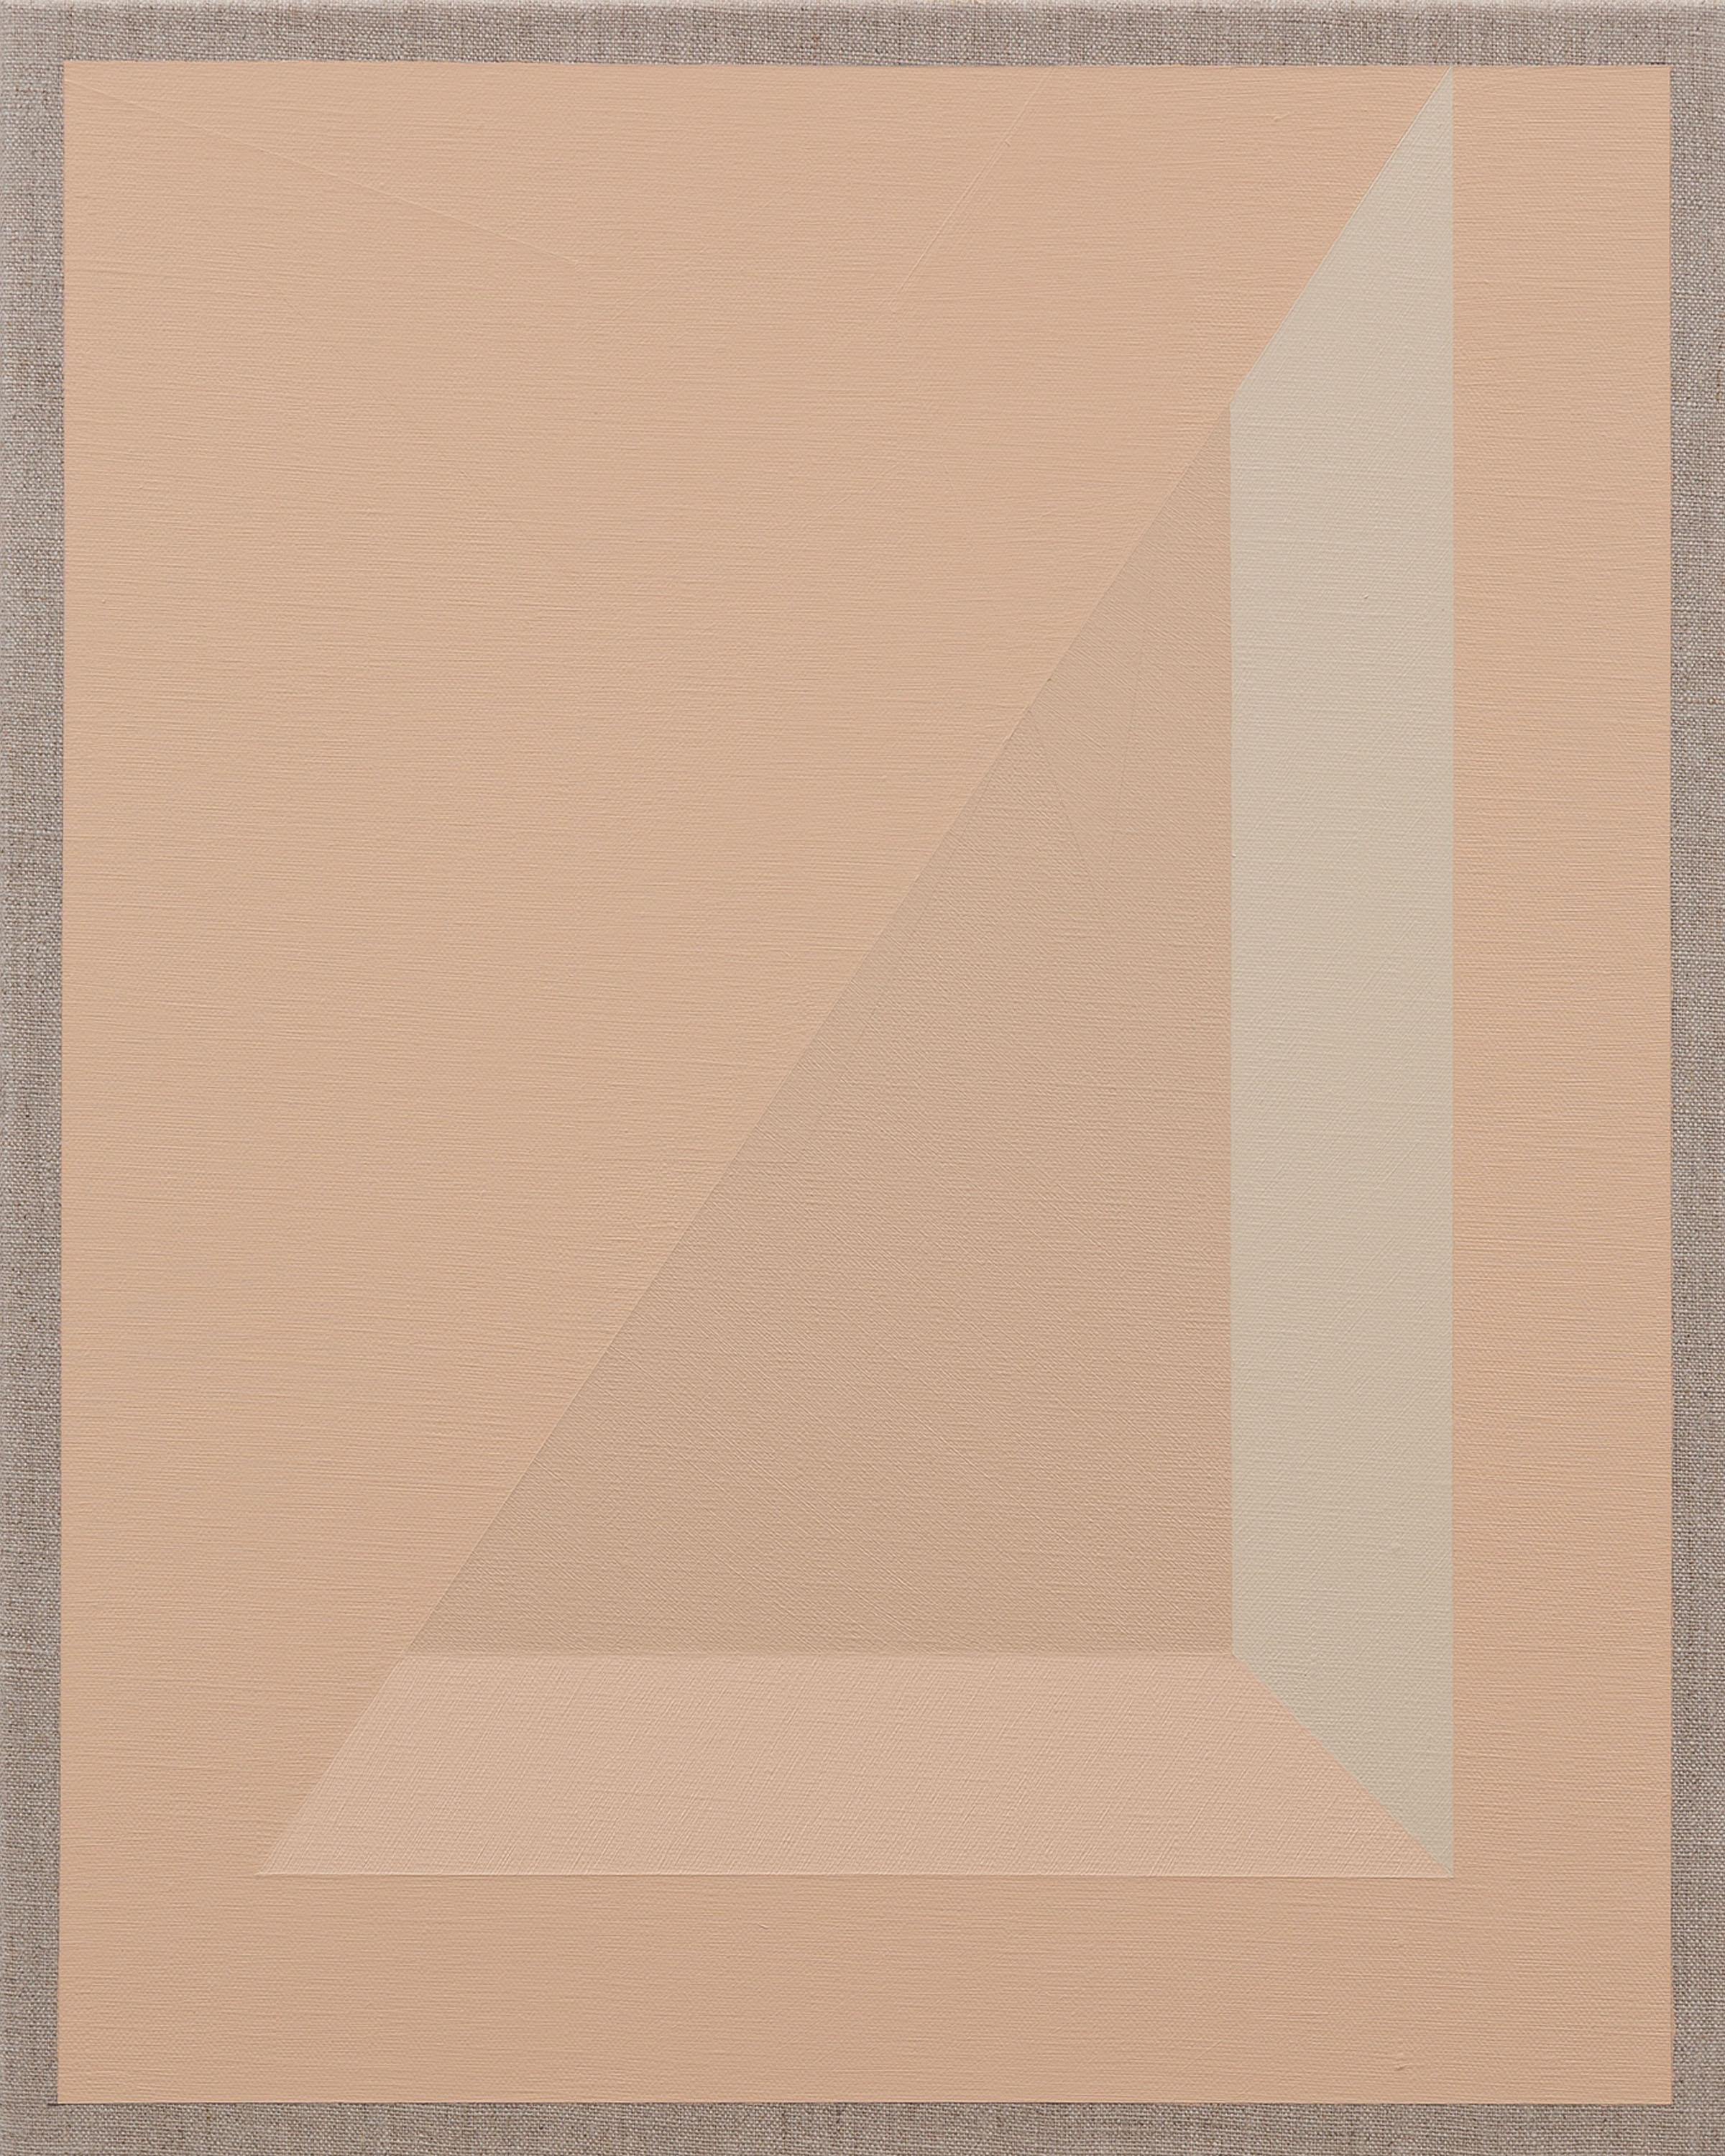 Karli Henneman Abstract Painting - K.149